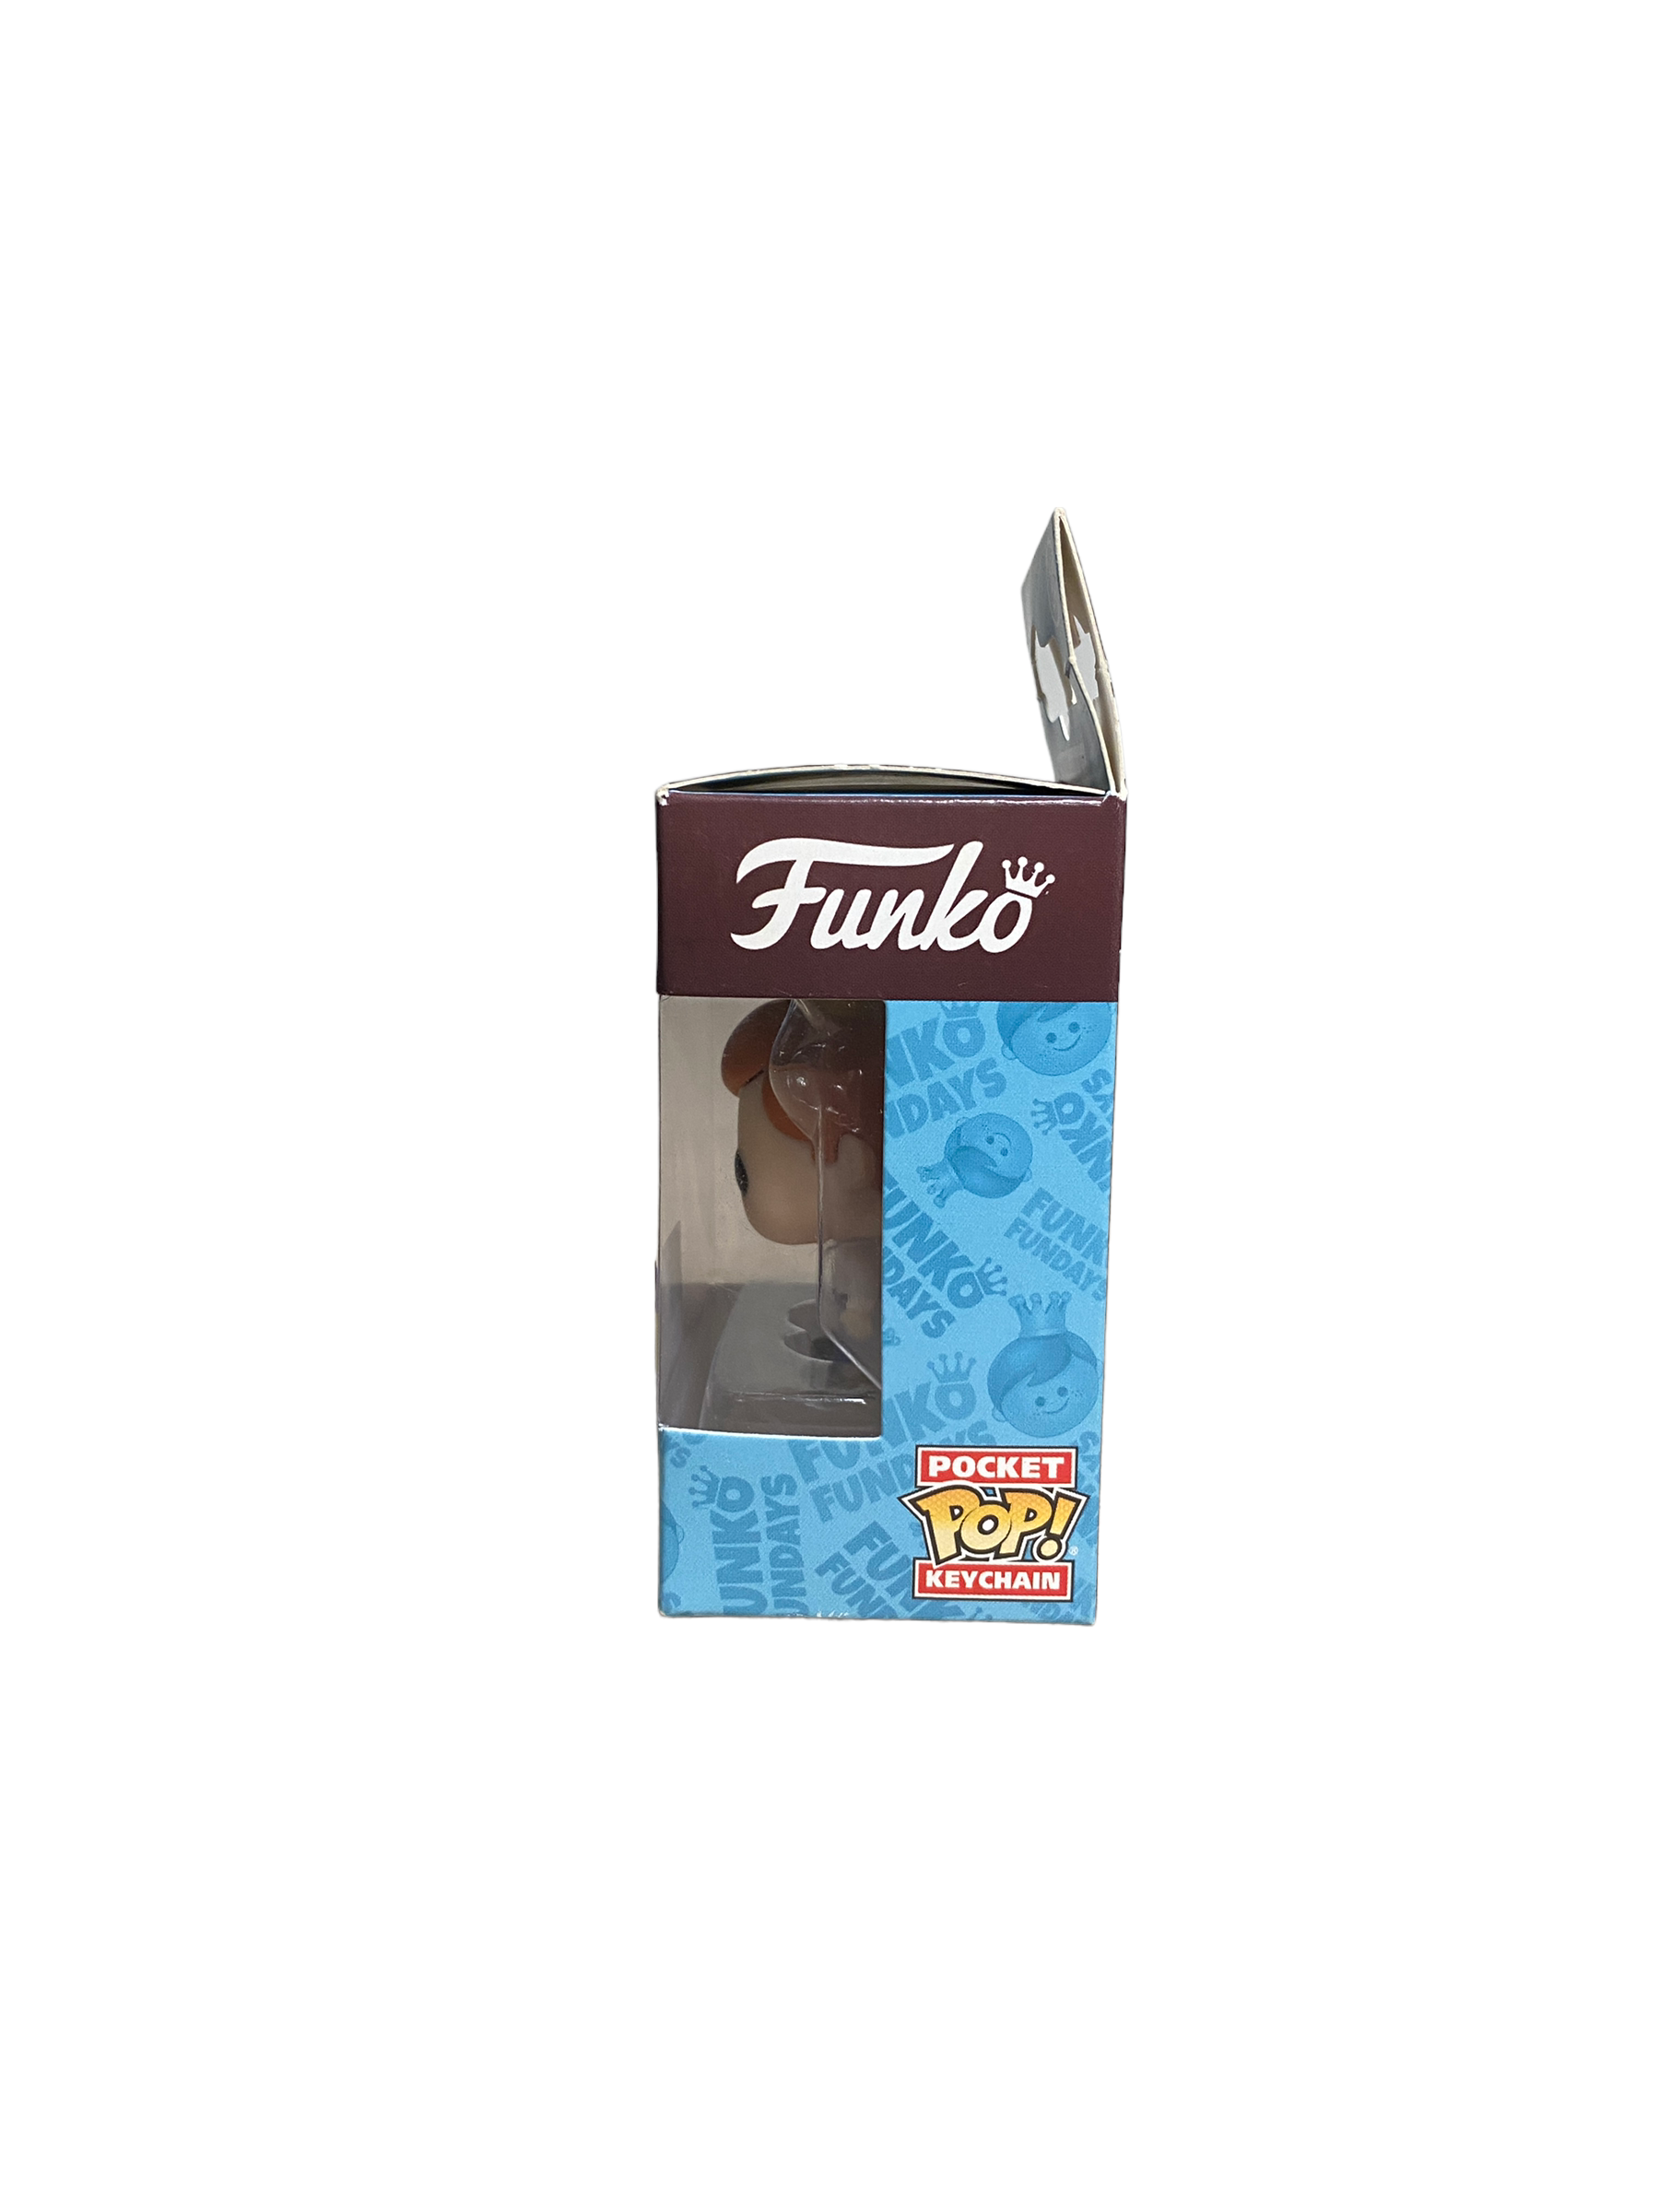 Freddy Funko Pocket Pop Keychain! SDCC 2017 Exclusive LE2000 Pcs - Condition 8/10